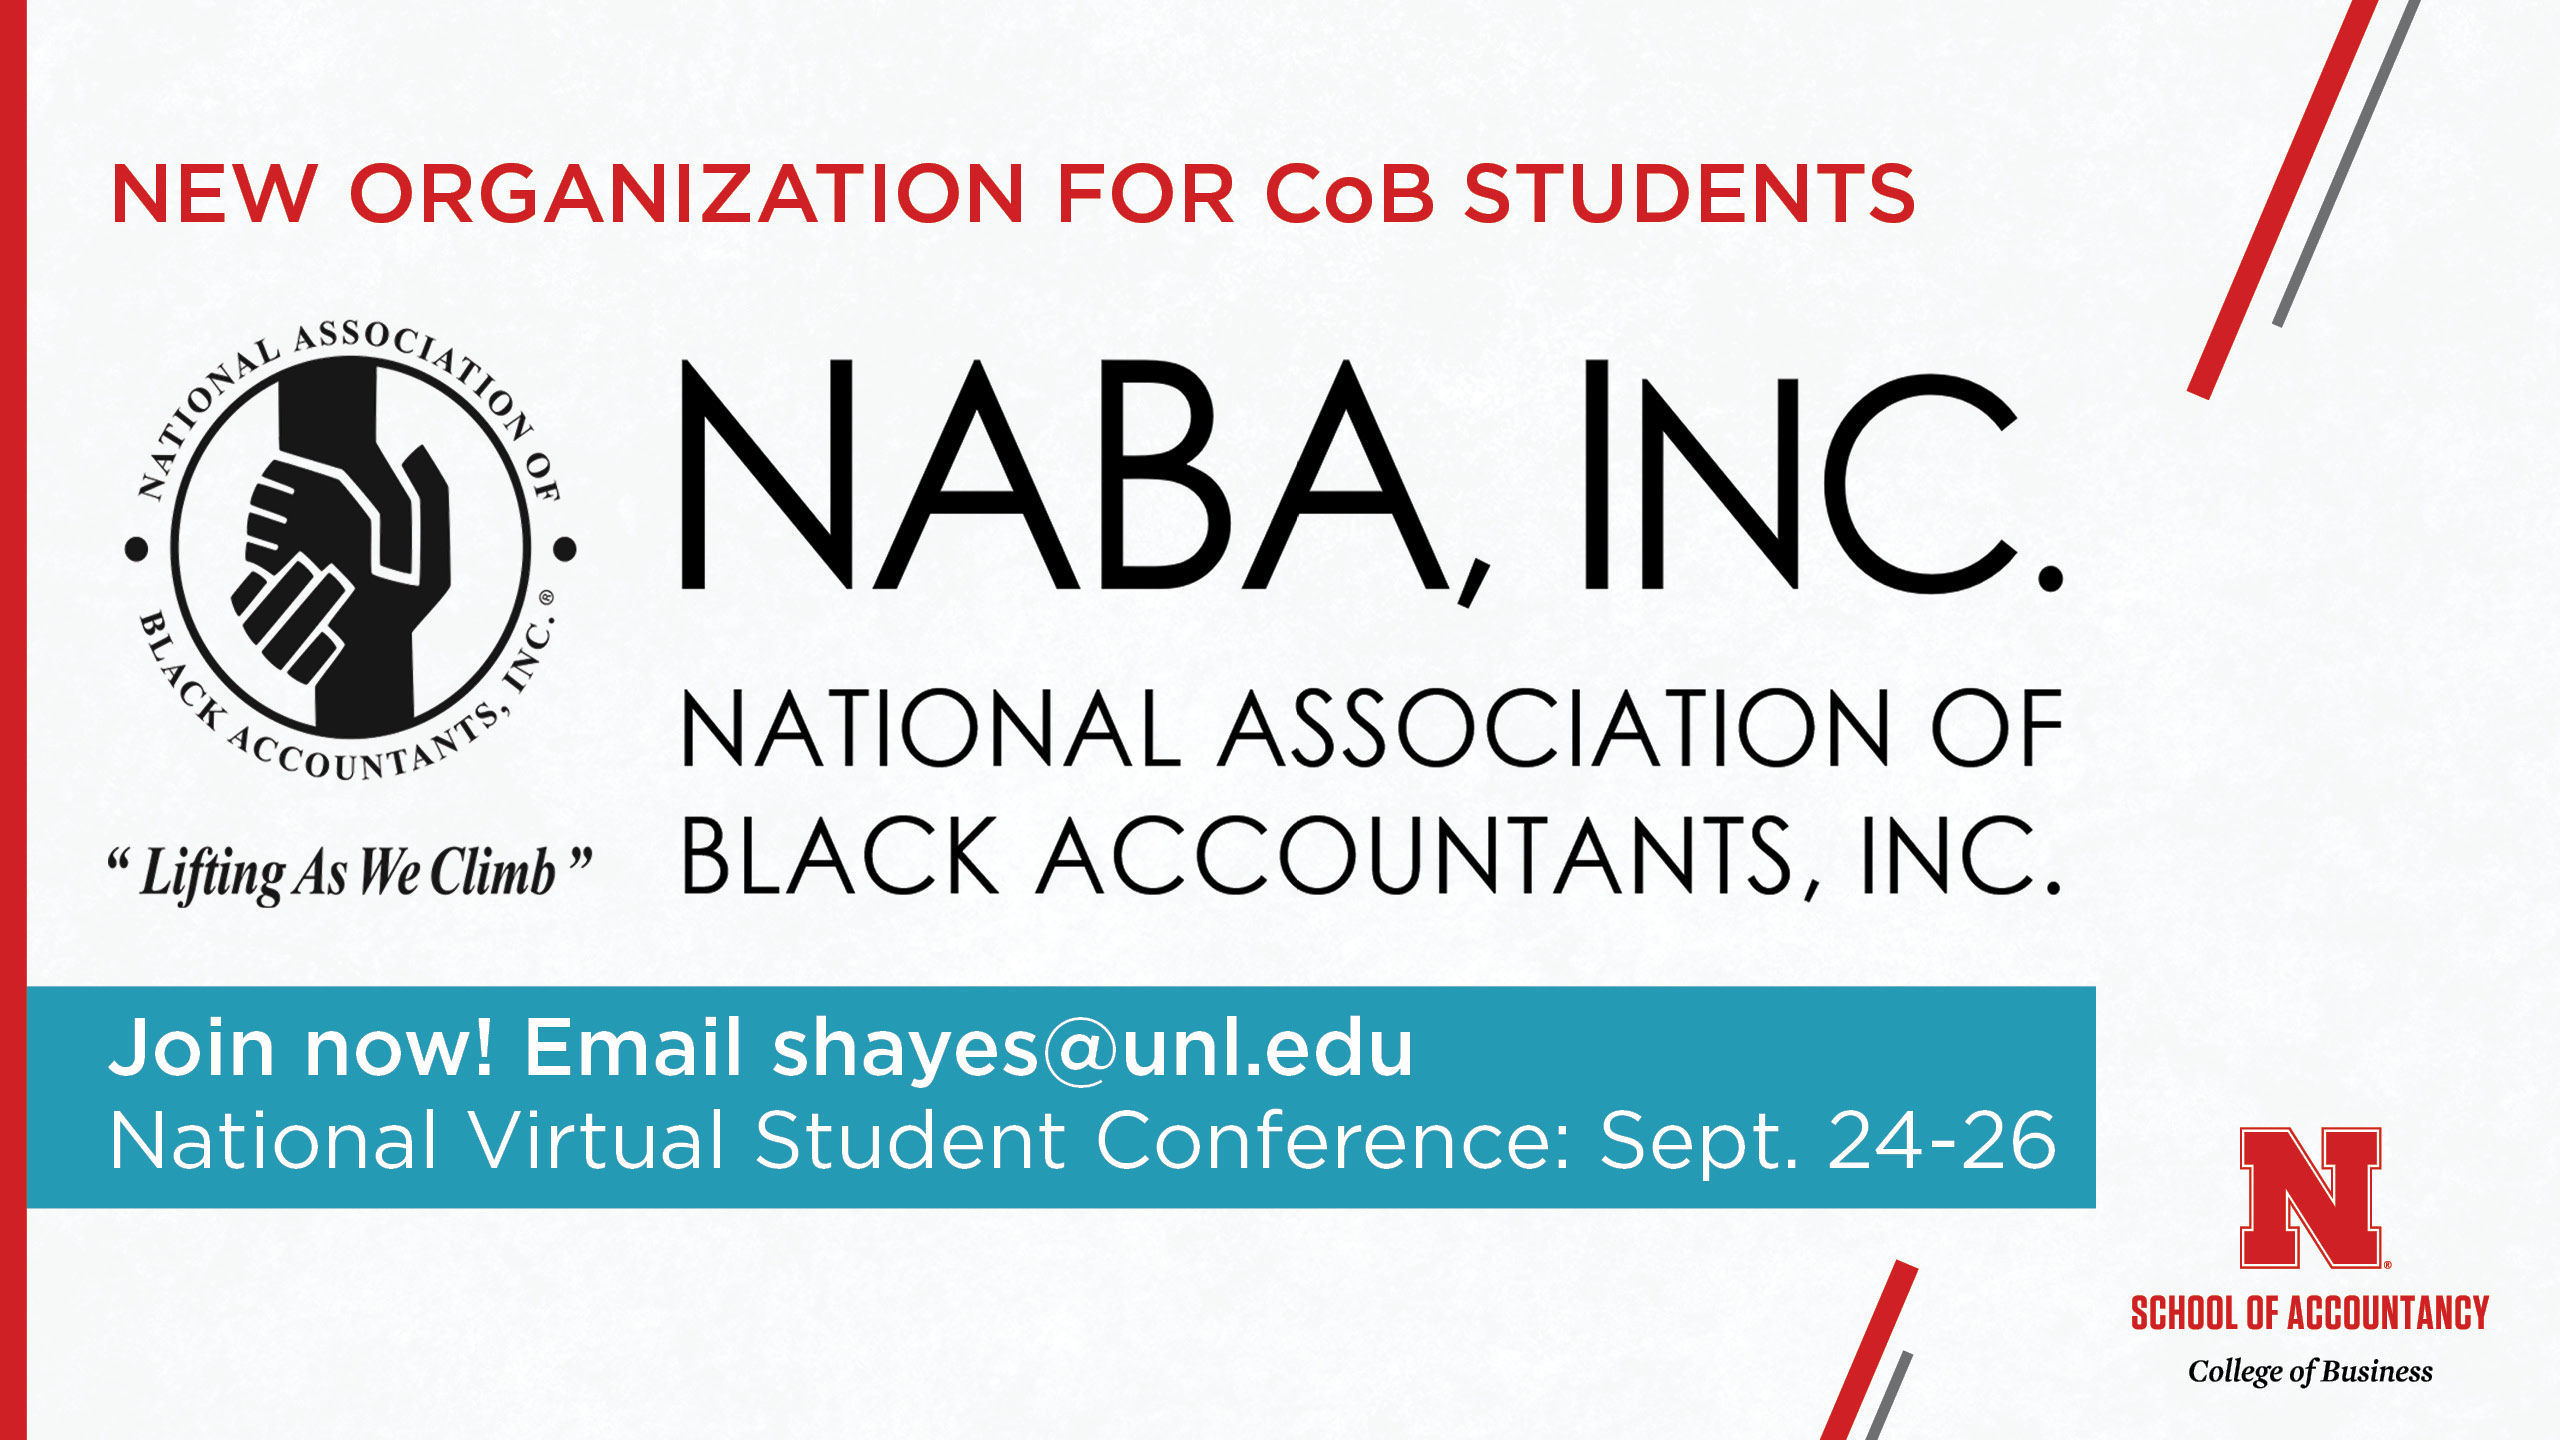 National Association of Black Accountants